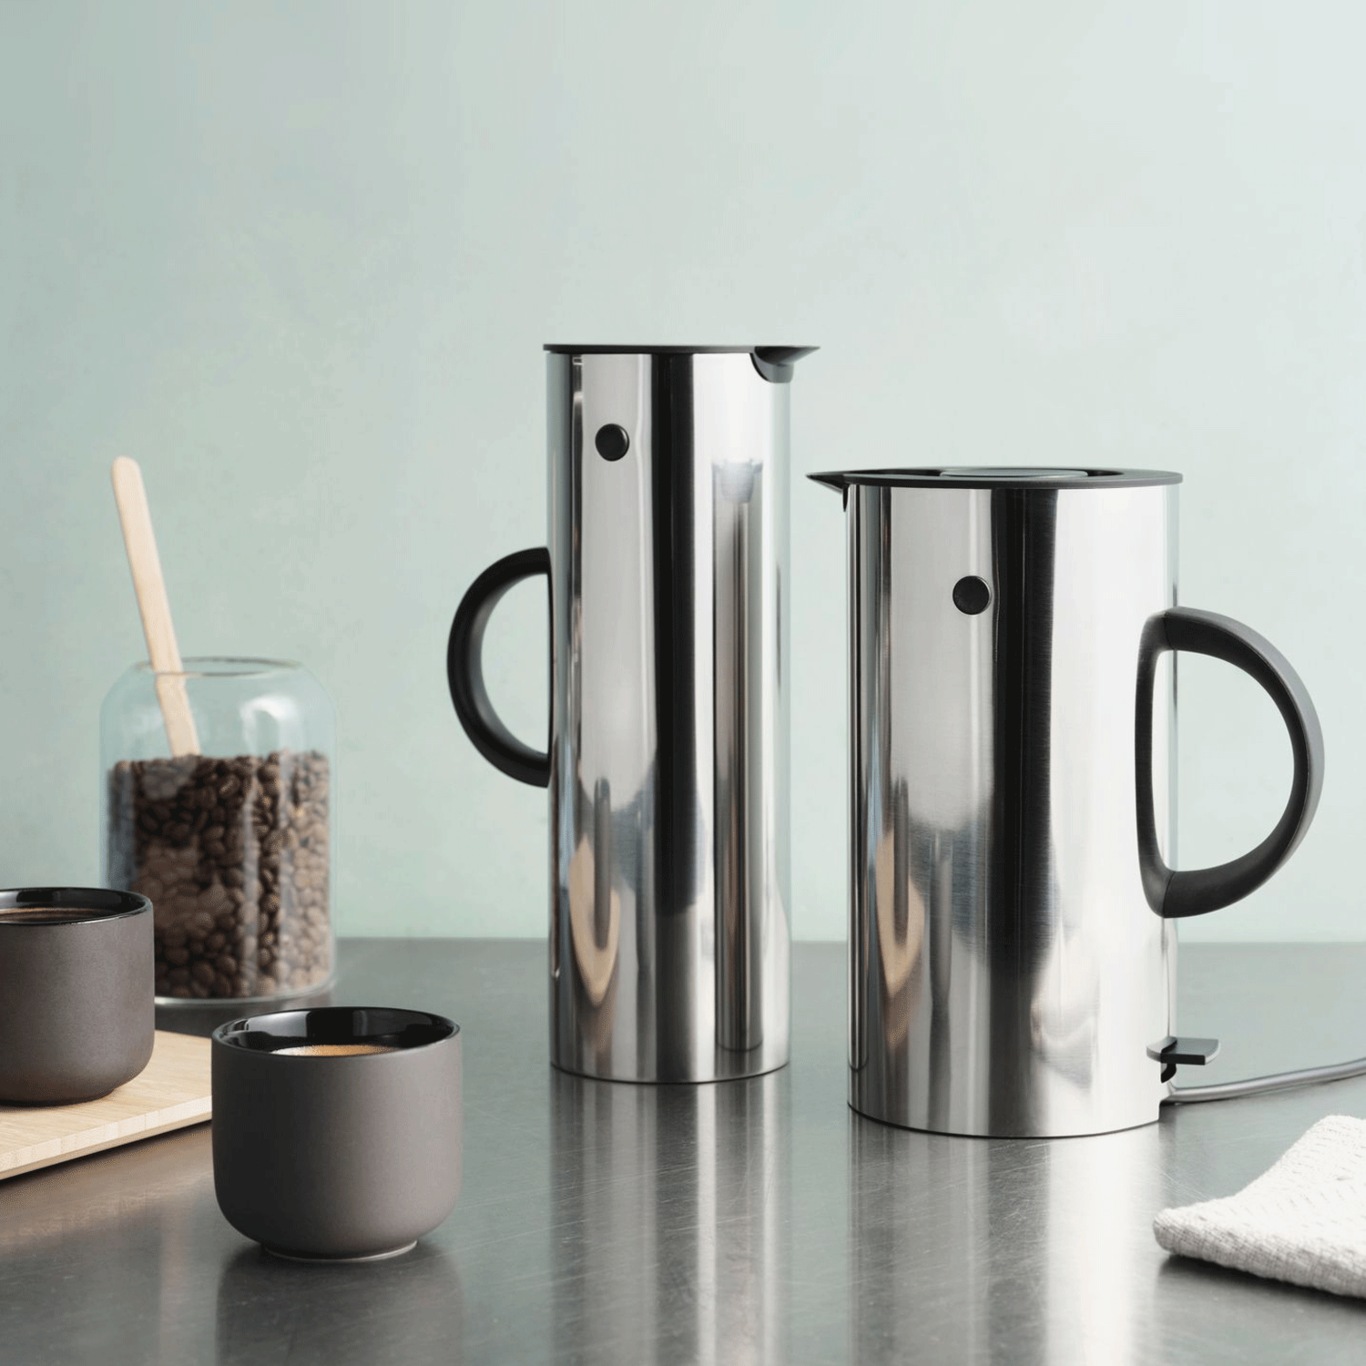 https://royaldesign.com/image/2/stelton-em77-classic-thermo-jug-steel-1l-3?w=800&quality=80